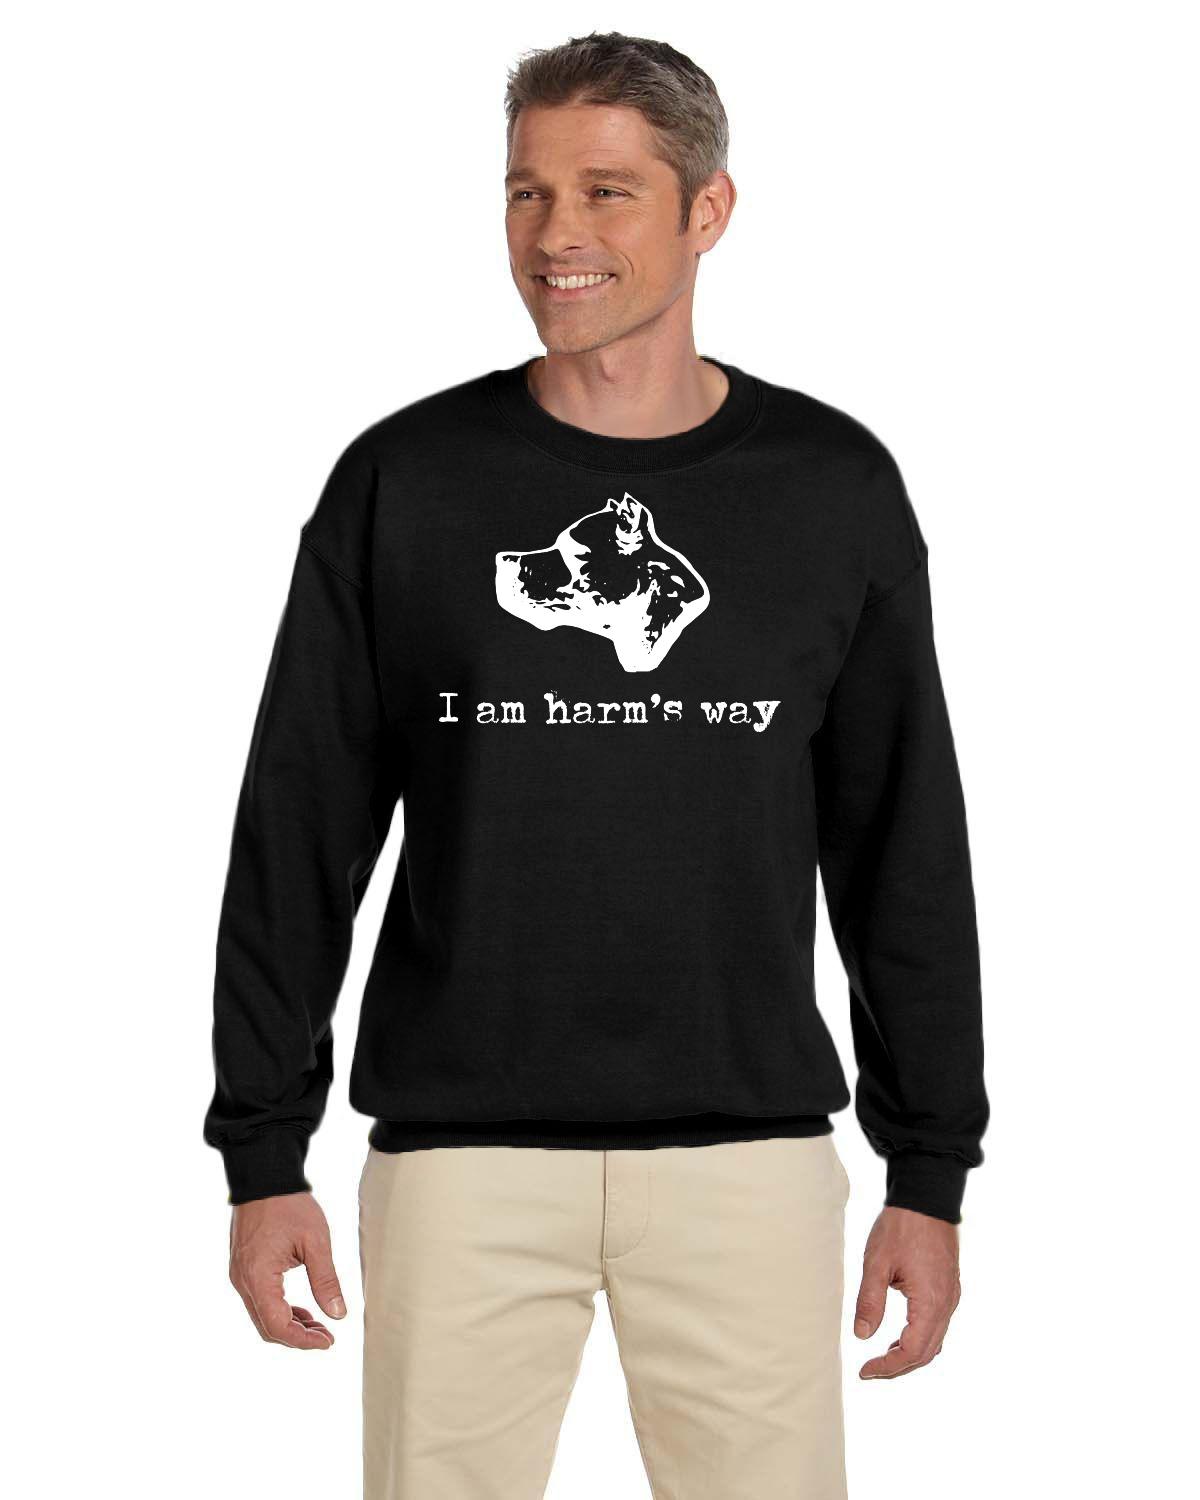 CDAC "I Am Harm's Way" Adult Crewneck Sweater Dark colours